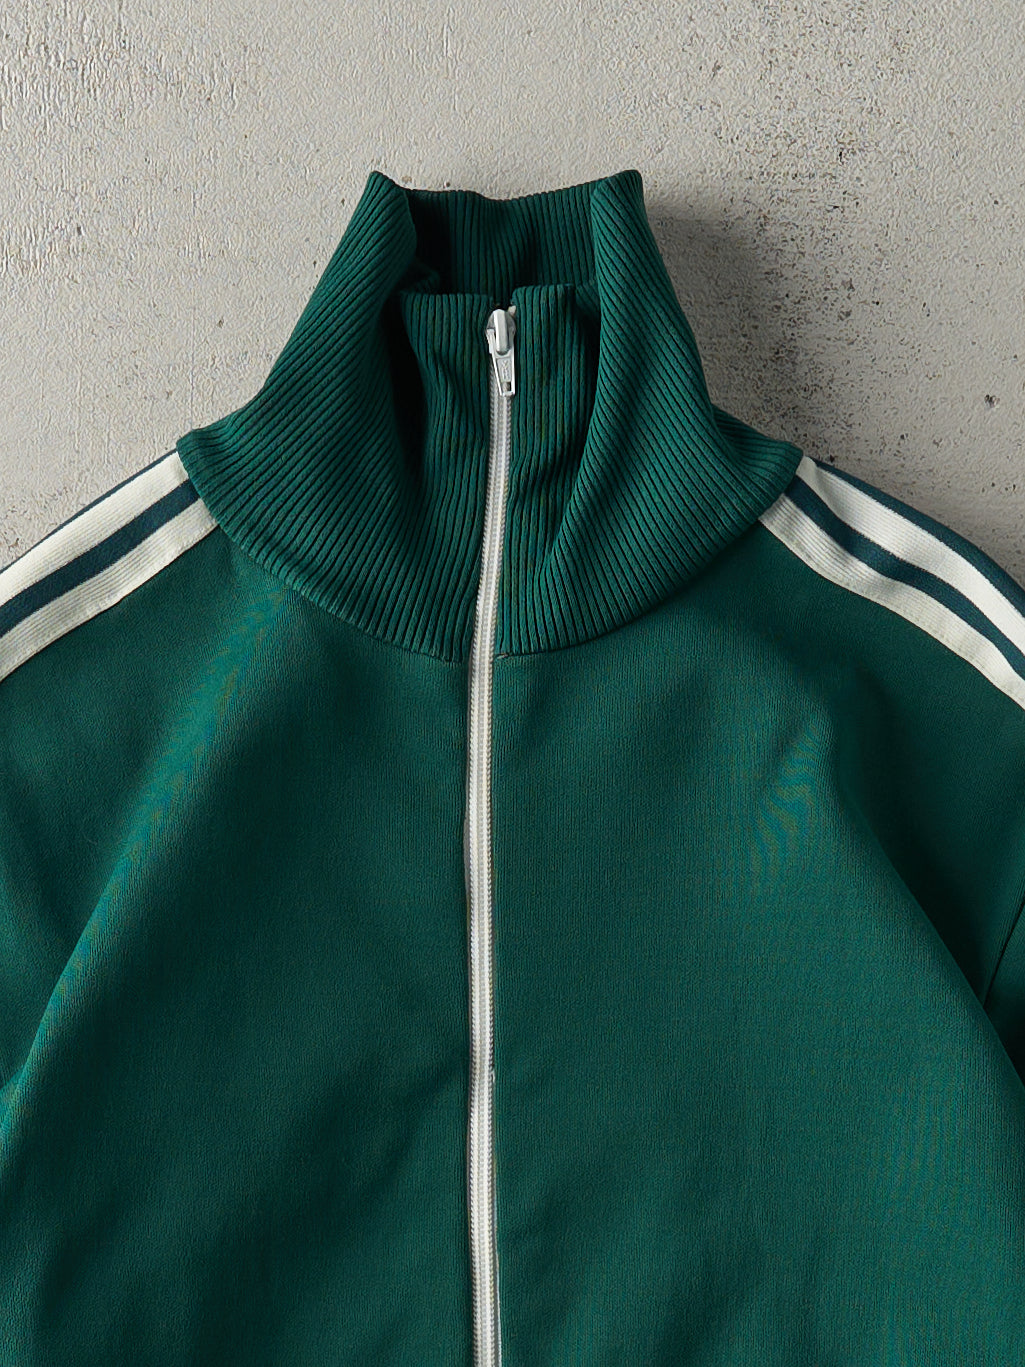 Vintage 90s Green Adidas Track Jacket (S/M)